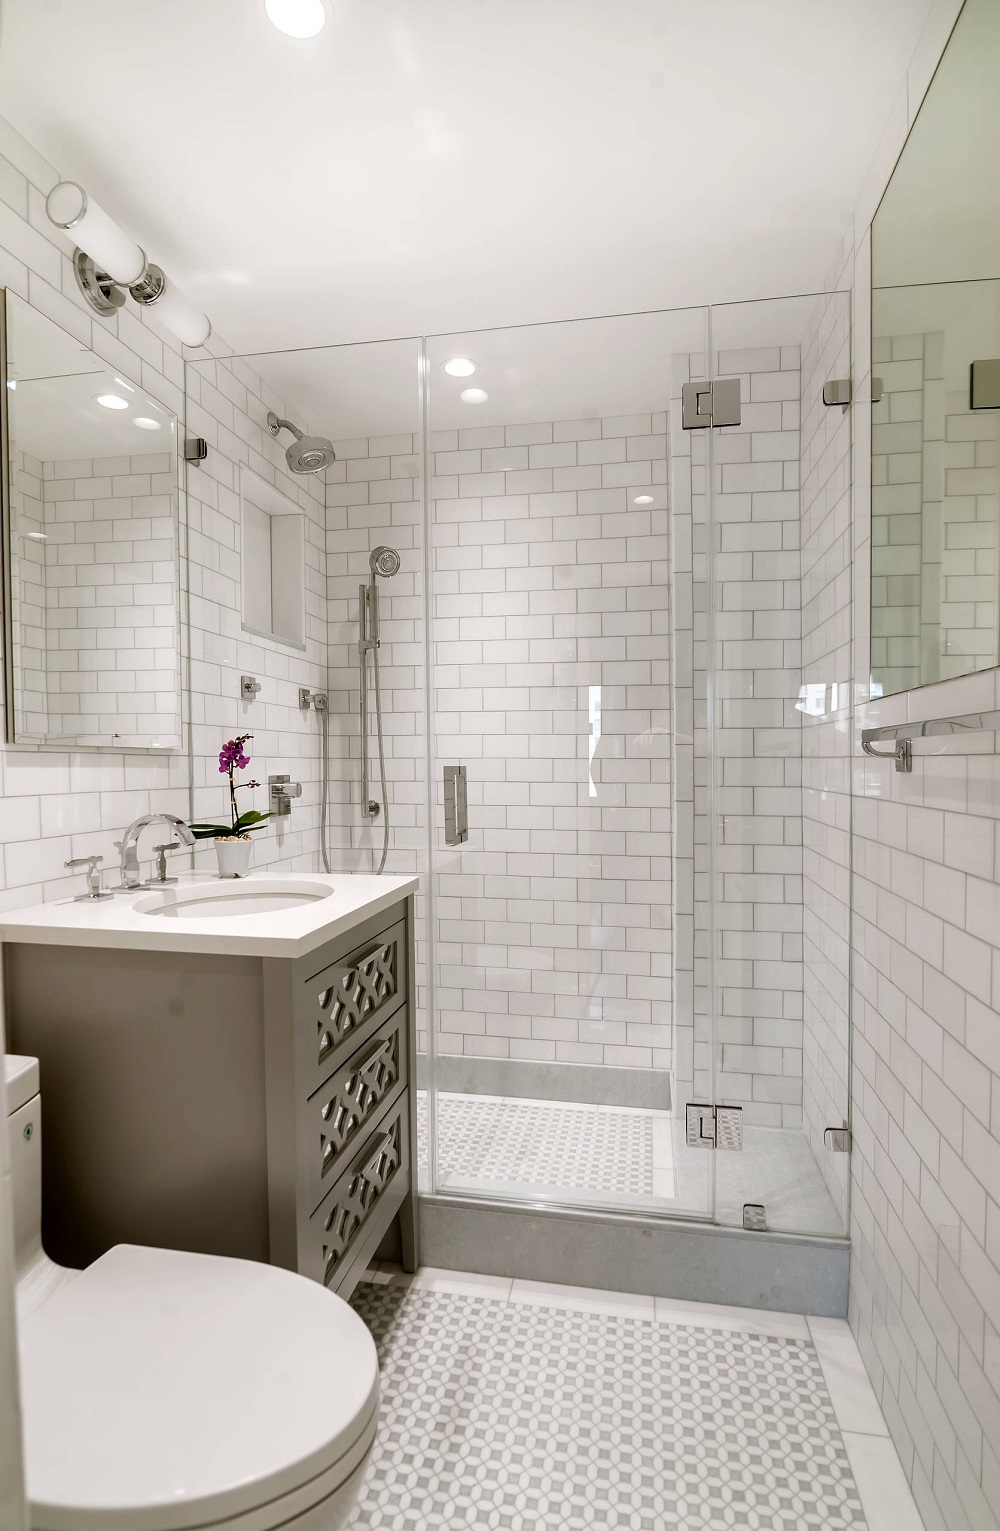 van6-2 Neat corner bathroom vanity ideas you will find useful